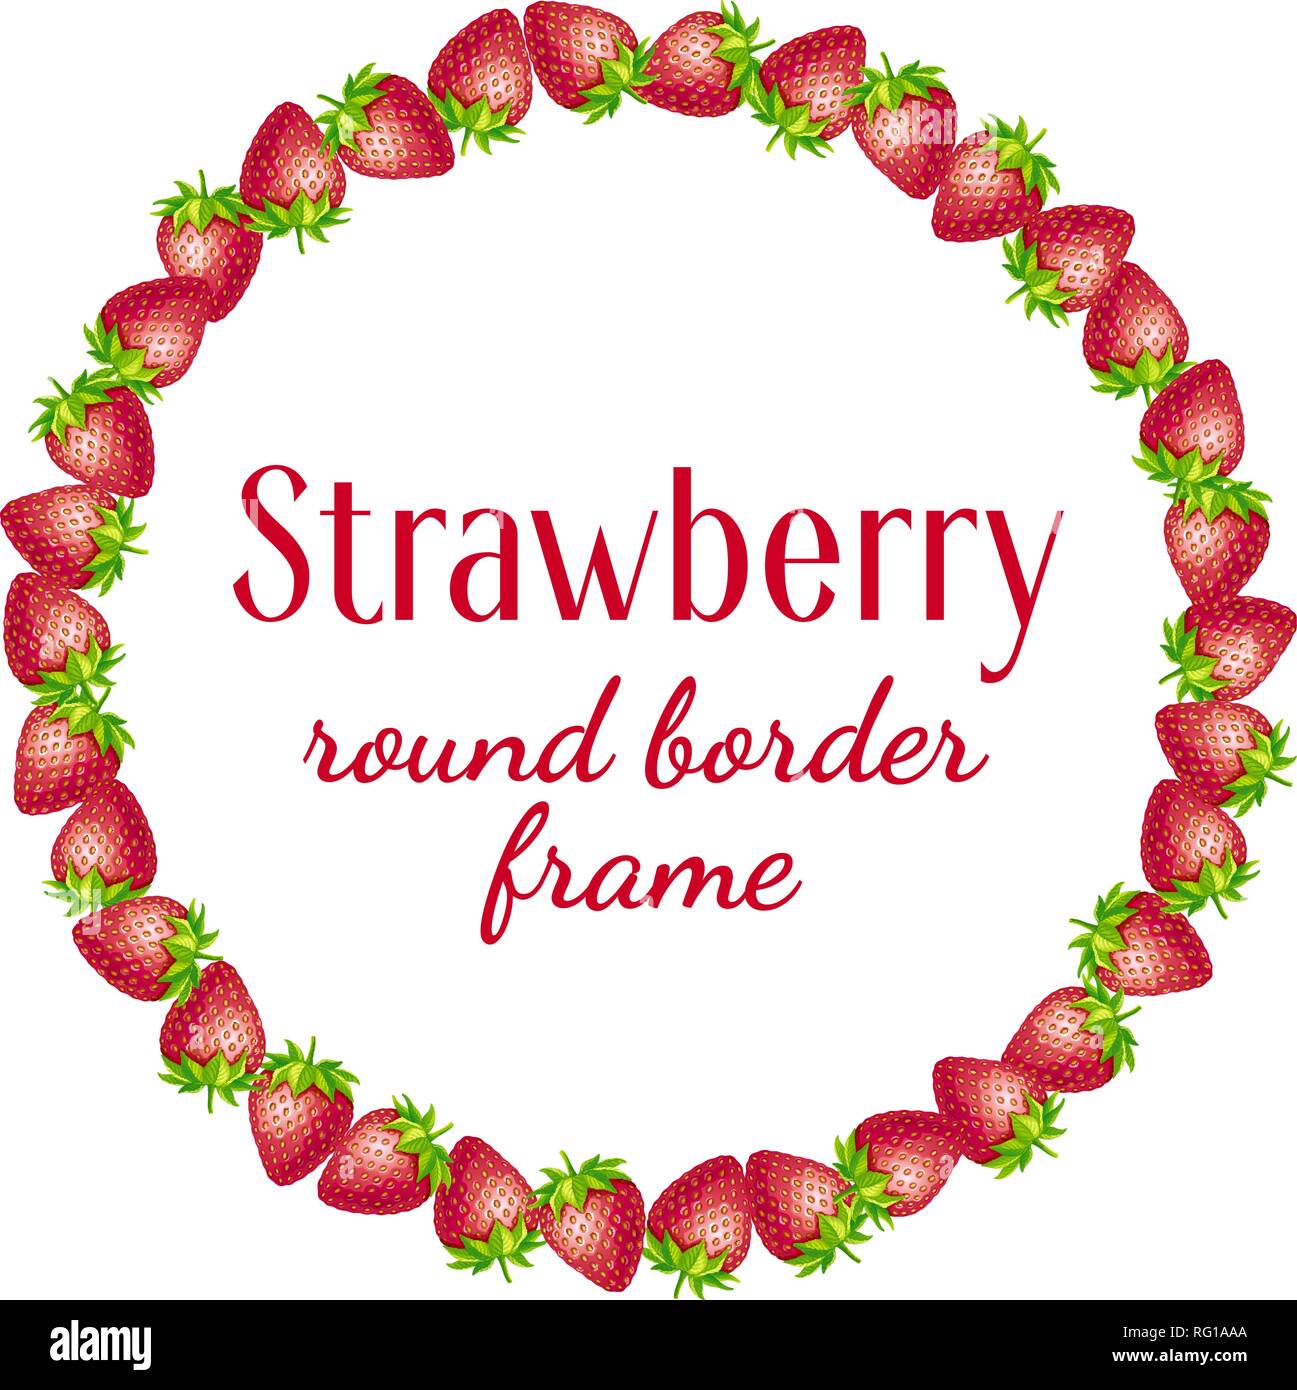 Strawberry round border frame. Stock Vector